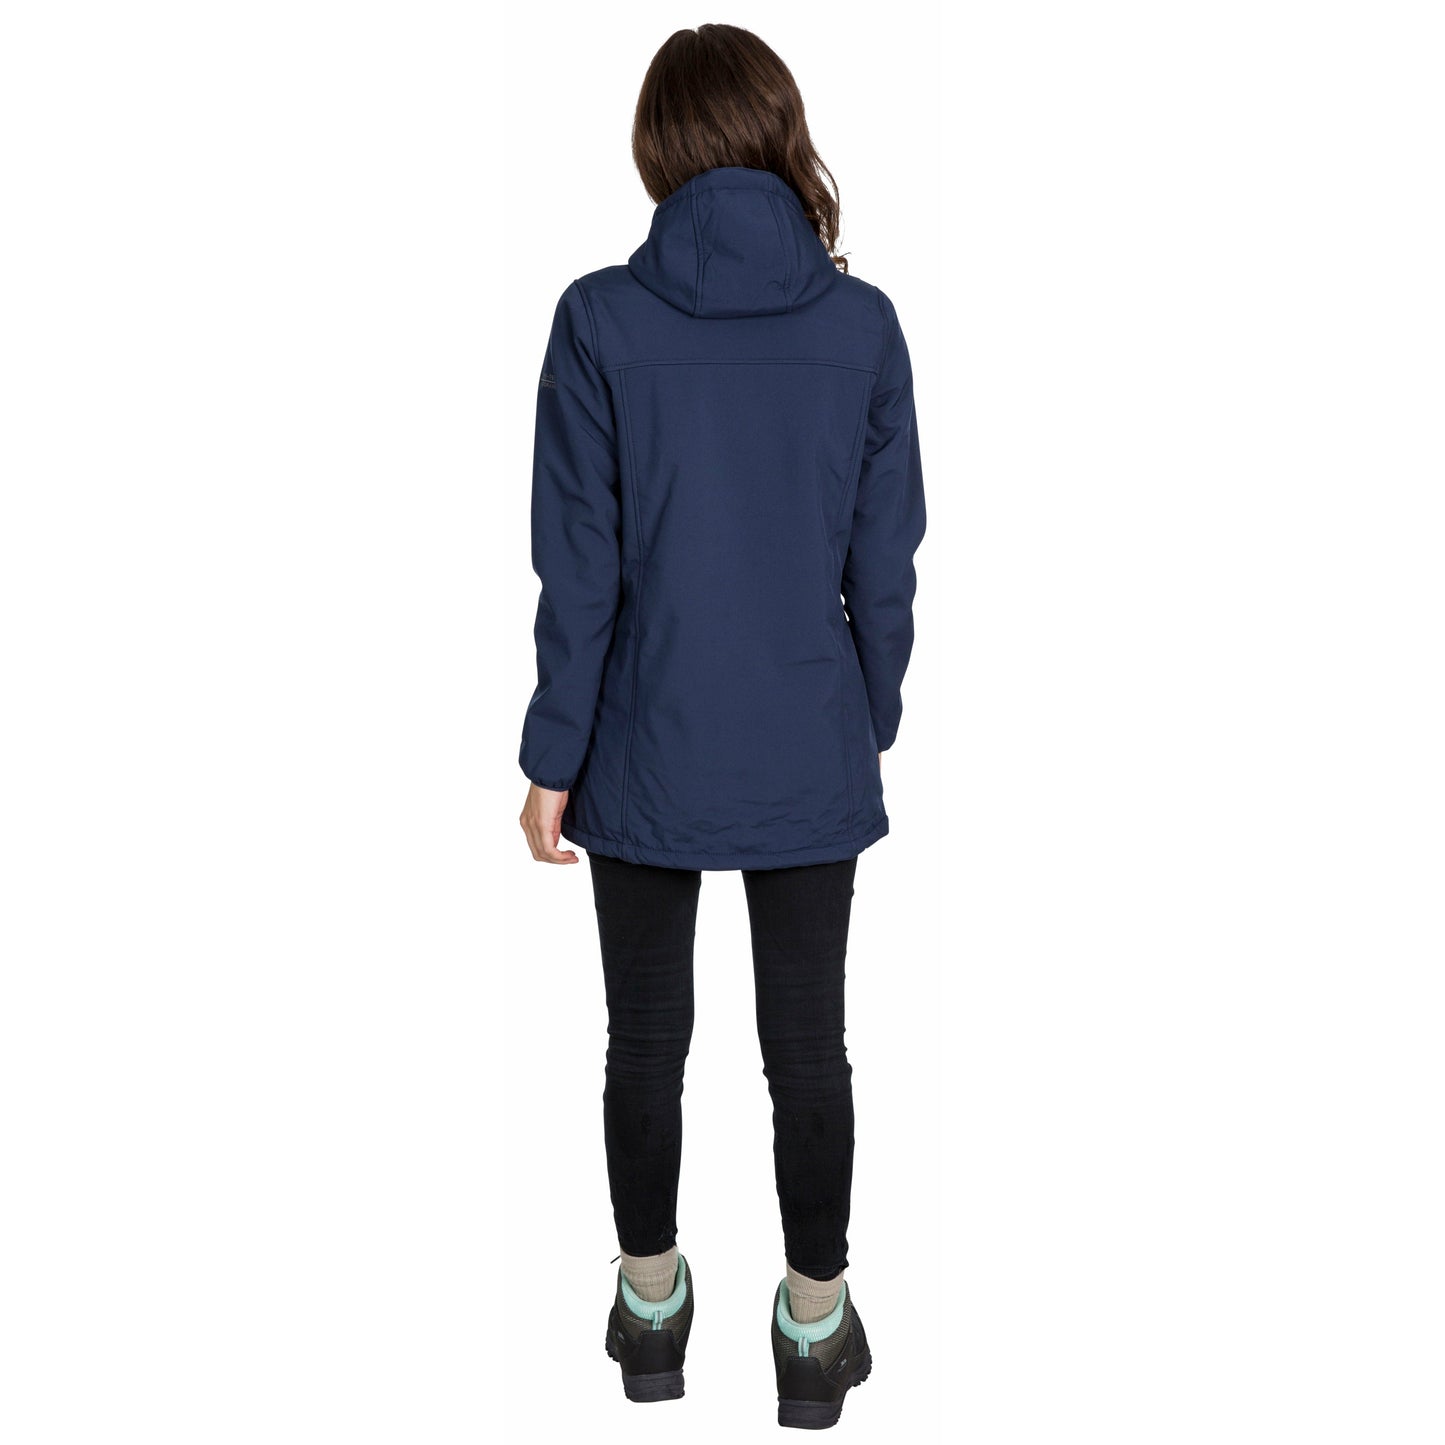 Kristen Women's Longer Length Softshell Jacket in Navy